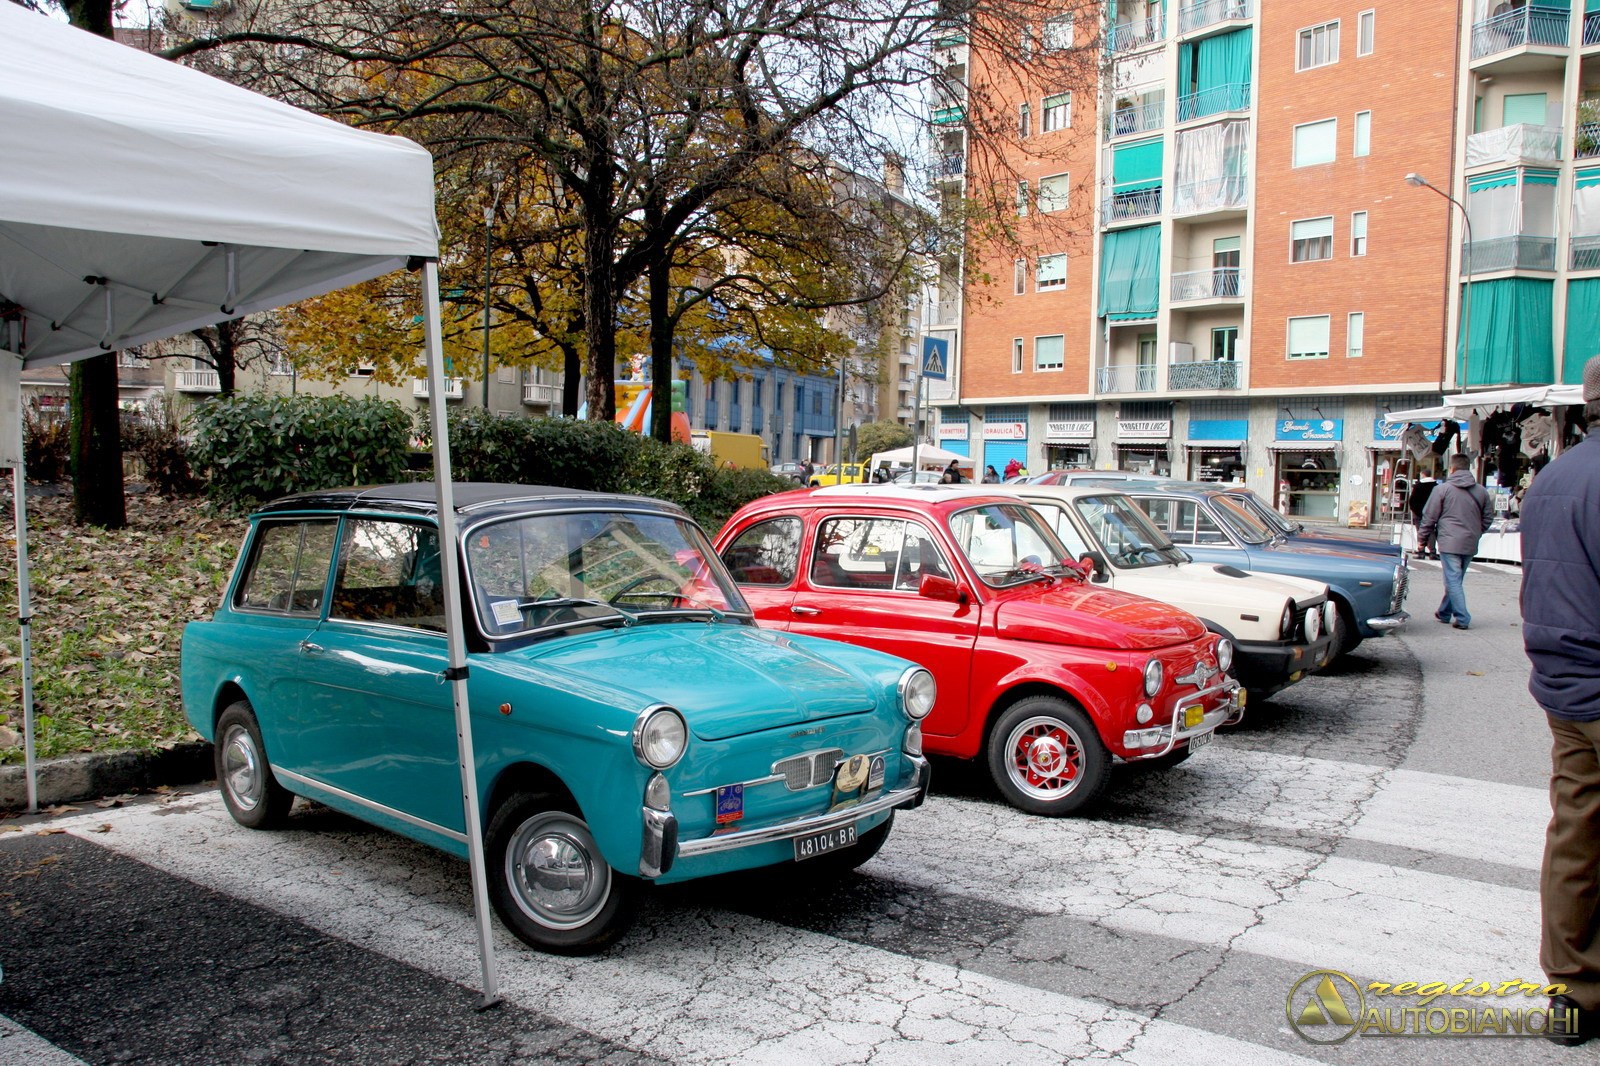 2014-11-16_Torino-piazza-Respighi_003